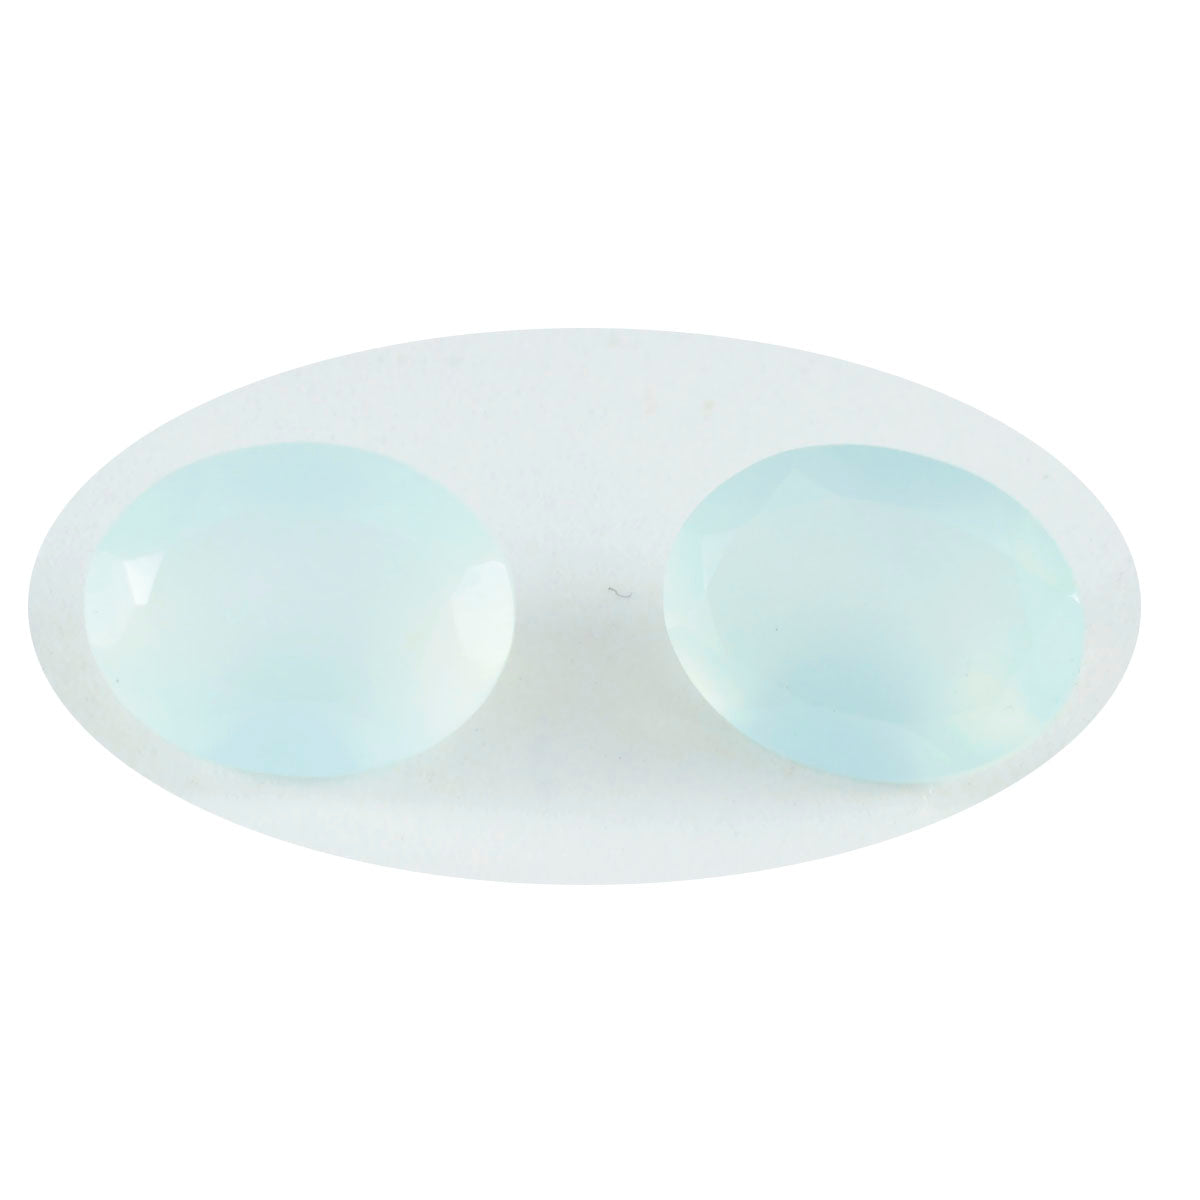 Riyogems 1PC Natural Aqua Chalcedony Faceted 10x12 mm Oval Shape astonishing Quality Loose Gems